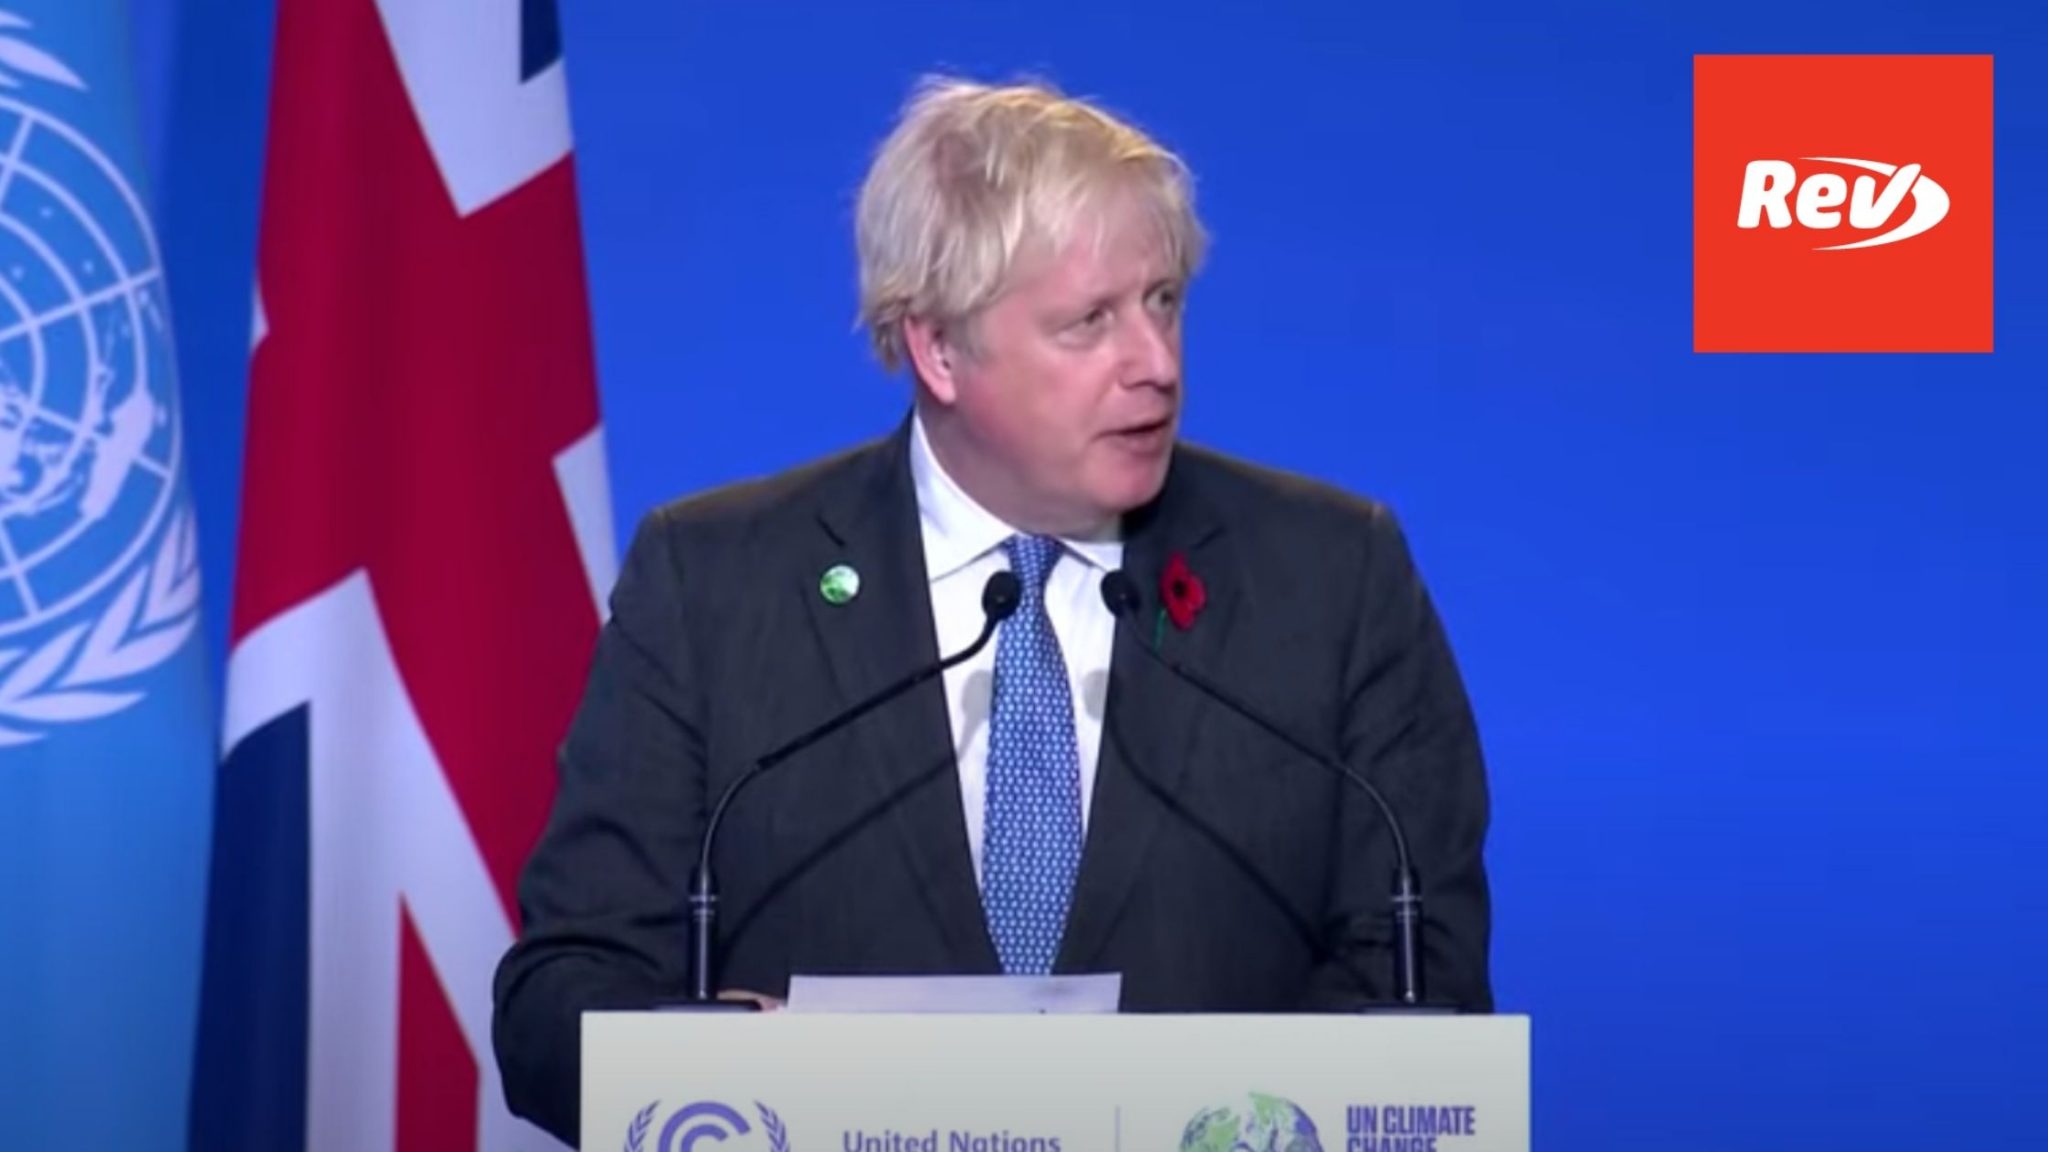 Boris Johnson COP26 Climate Summit Glasgow Speech Transcript